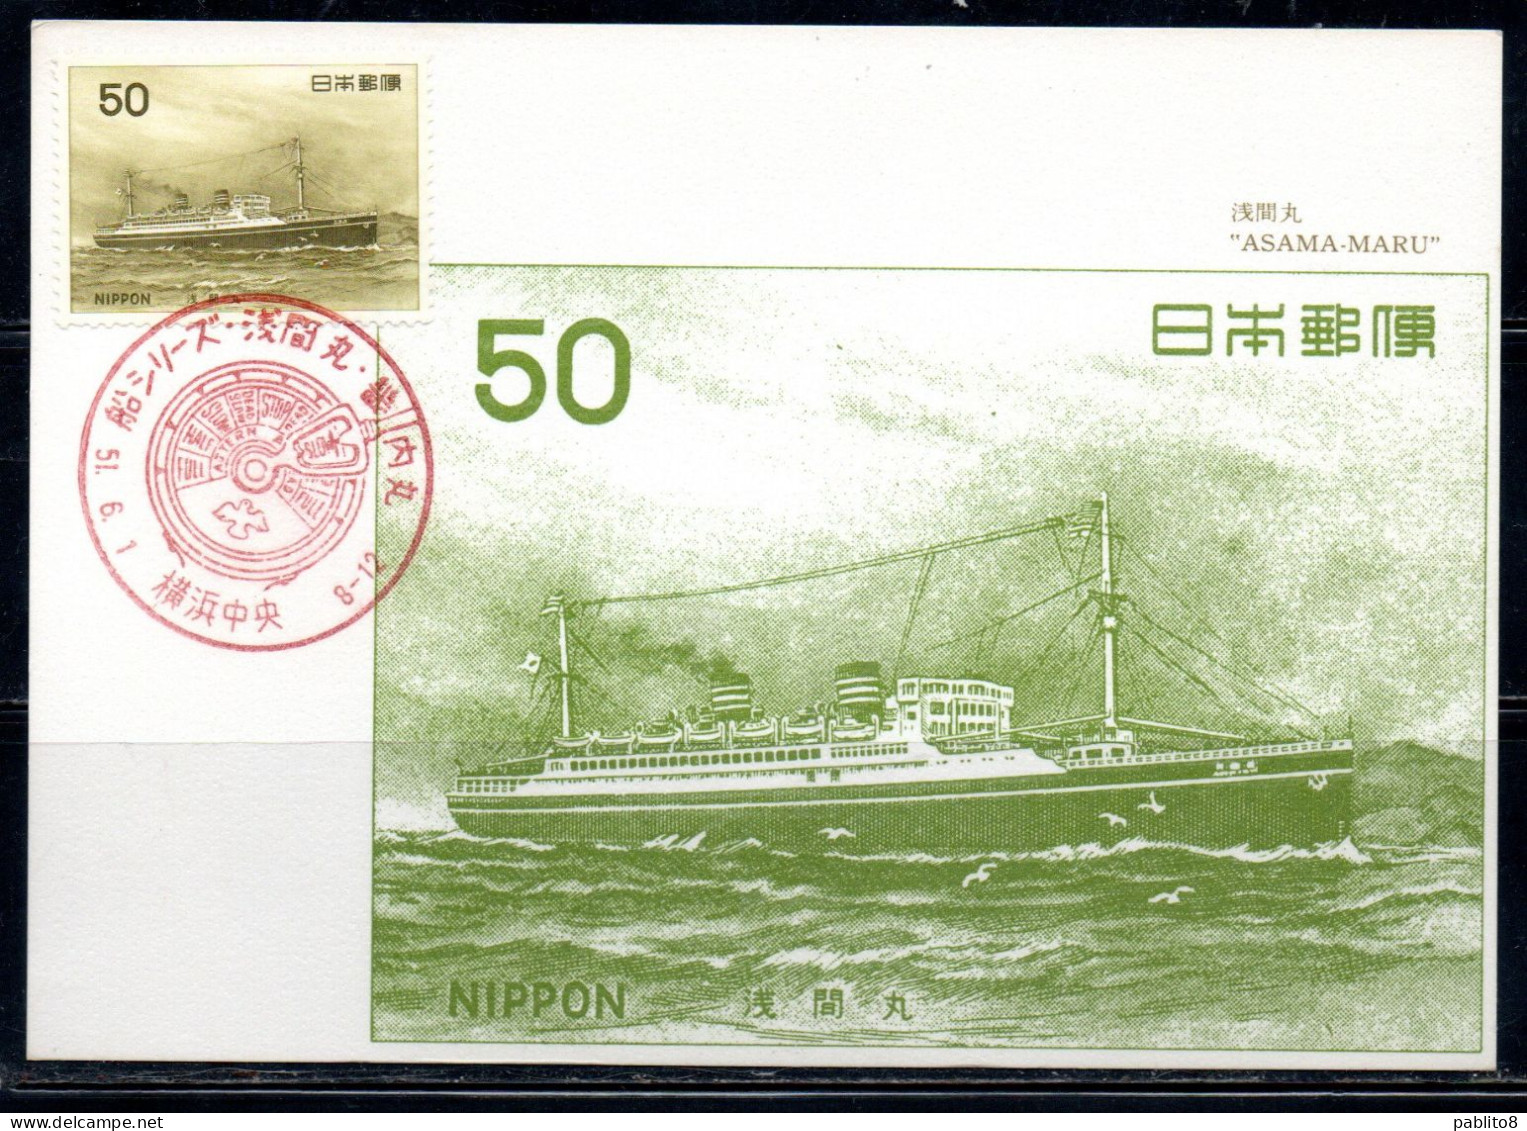 JAPAN GIAPPONE 1975 1976 HISTORIC SHIPS ISSUE ASAMA-MARU SHIP 50y MAXI MAXIMUM CARD - Cartes-maximum